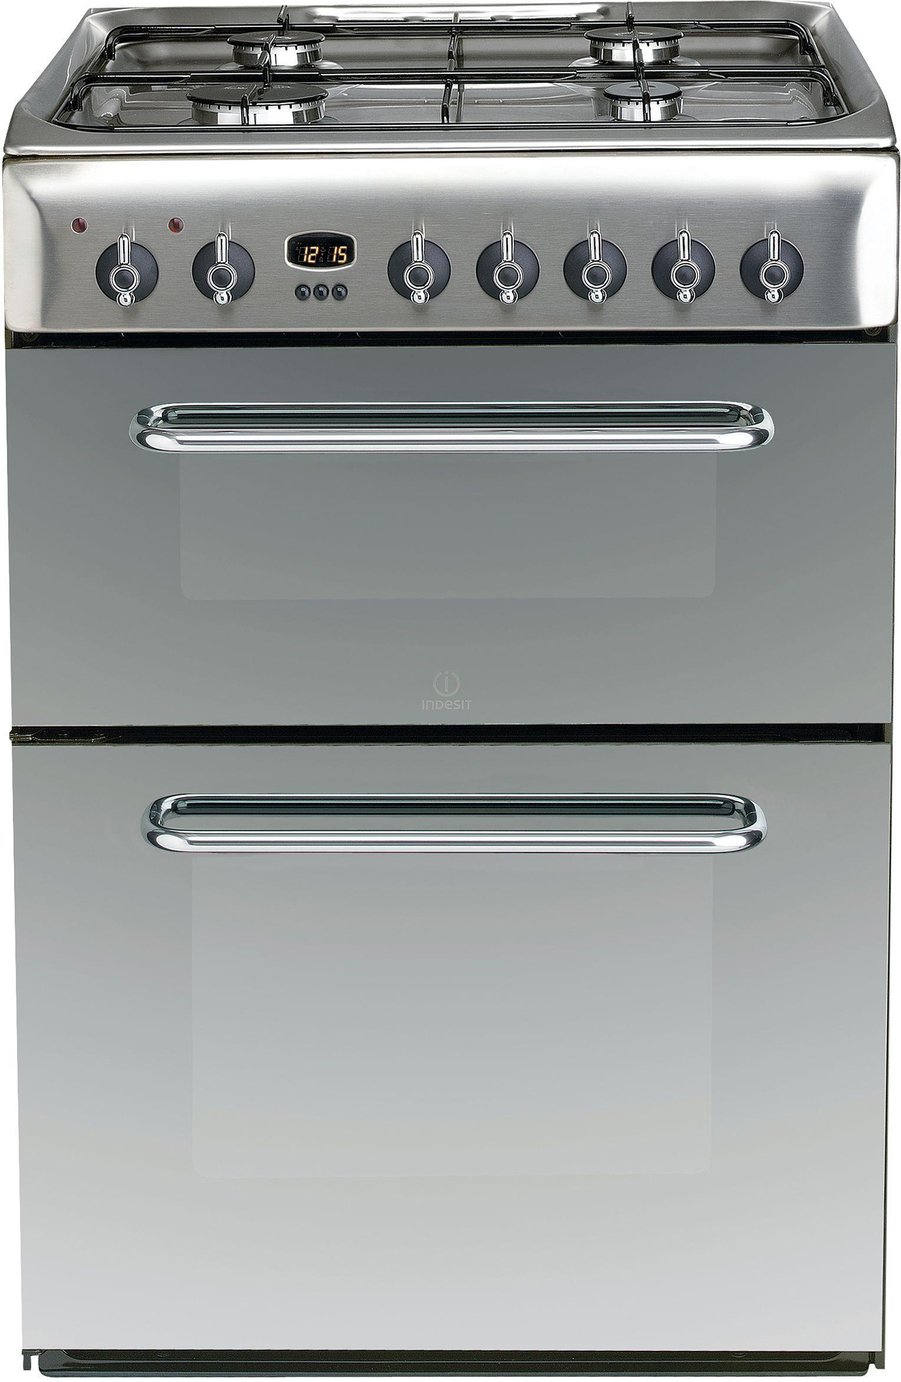 Indesit KDP60SE S 60cm Double Oven Dual Fuel Cooker - Steel